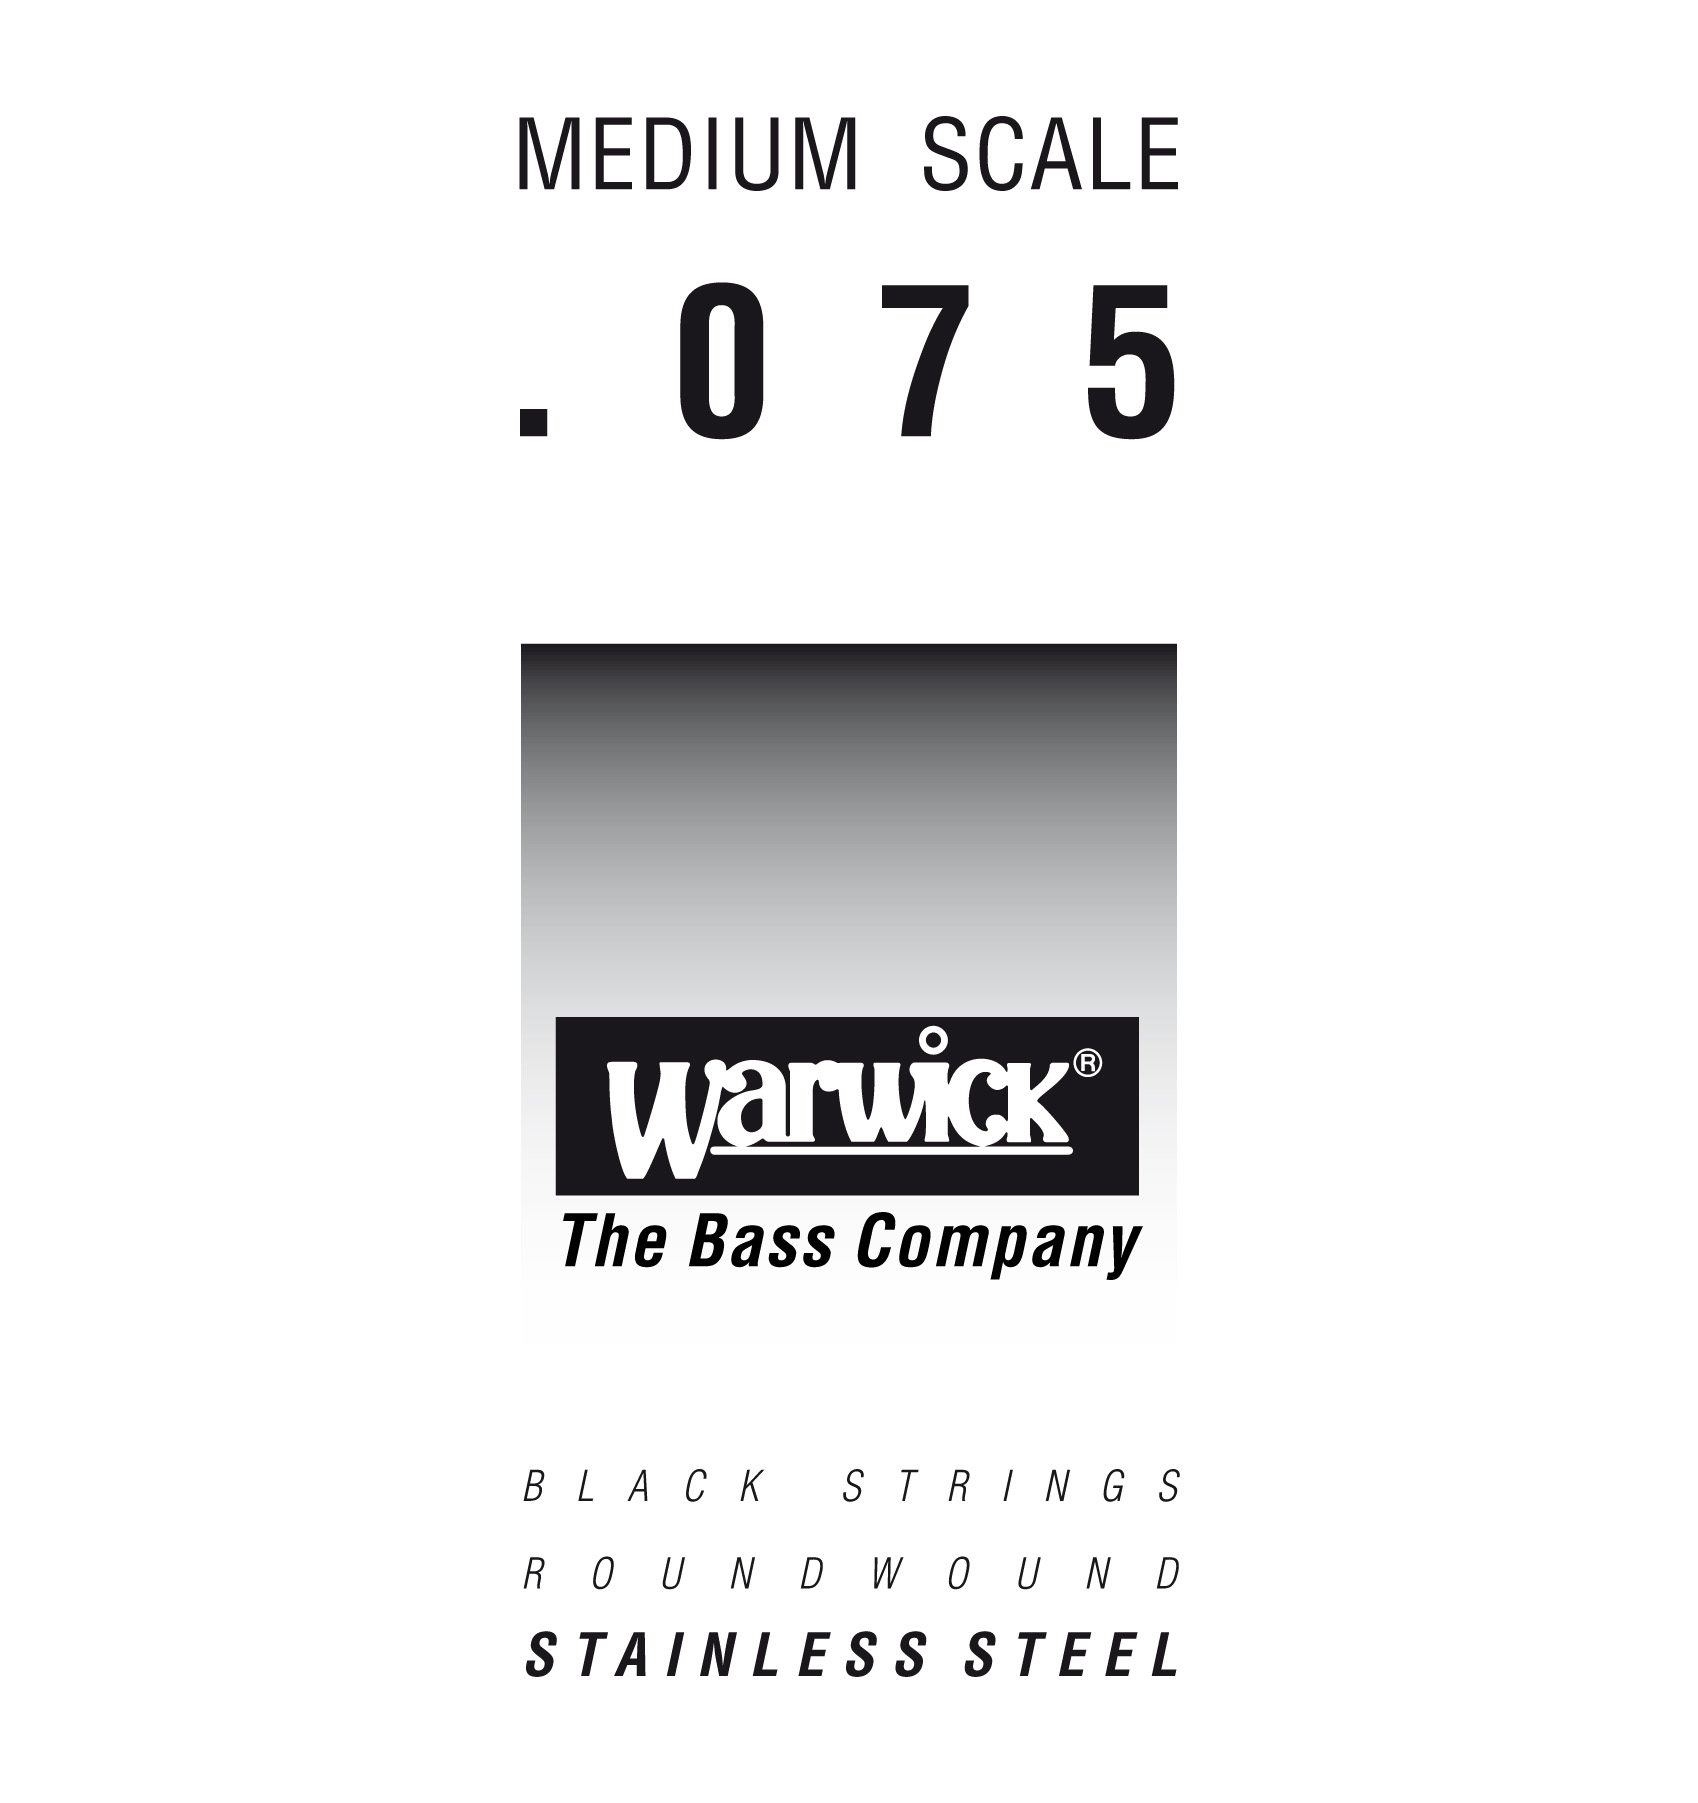 Warwick Black Label Bass Strings, Stainless Steel - Bass Single String, .075", Medium Scale